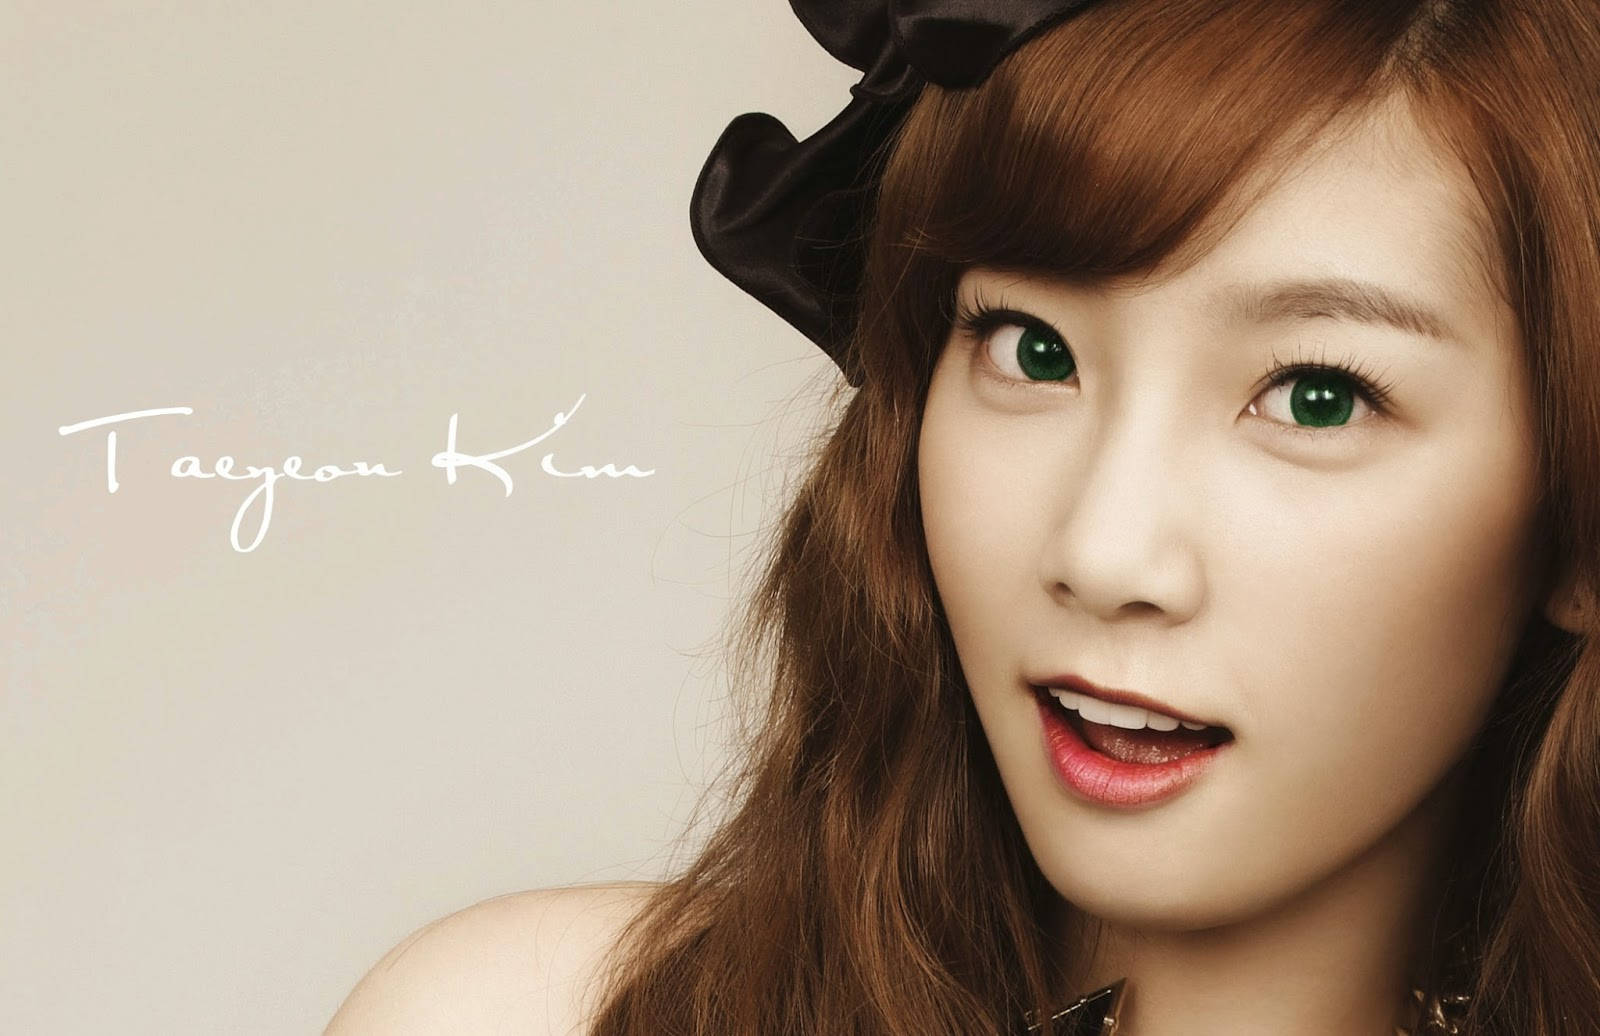 Kim Taeyeon's smukke ansigt fylder baggrunden. Wallpaper